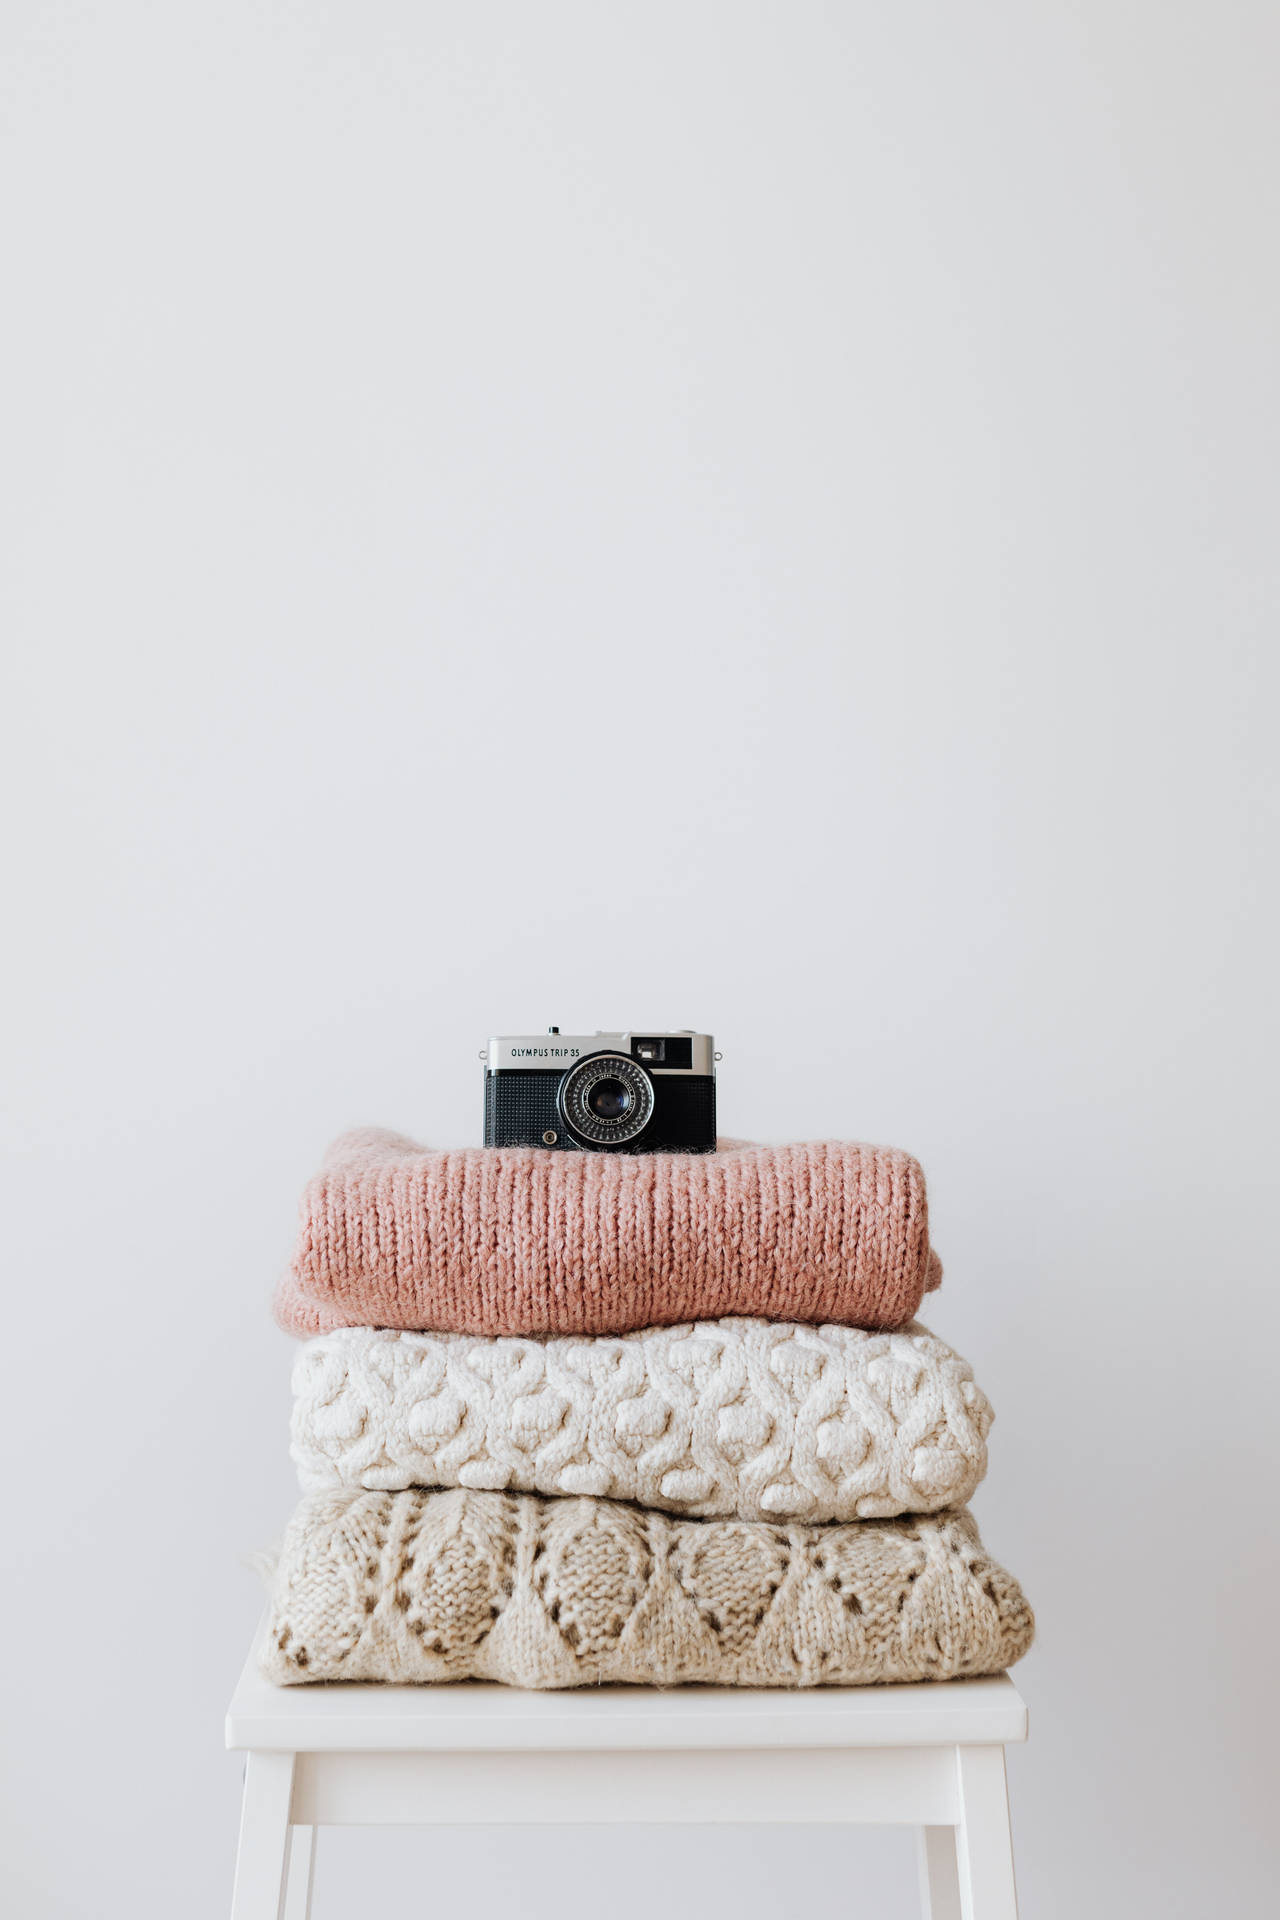 Camera Above Knitted Sweatshirt Wallpaper